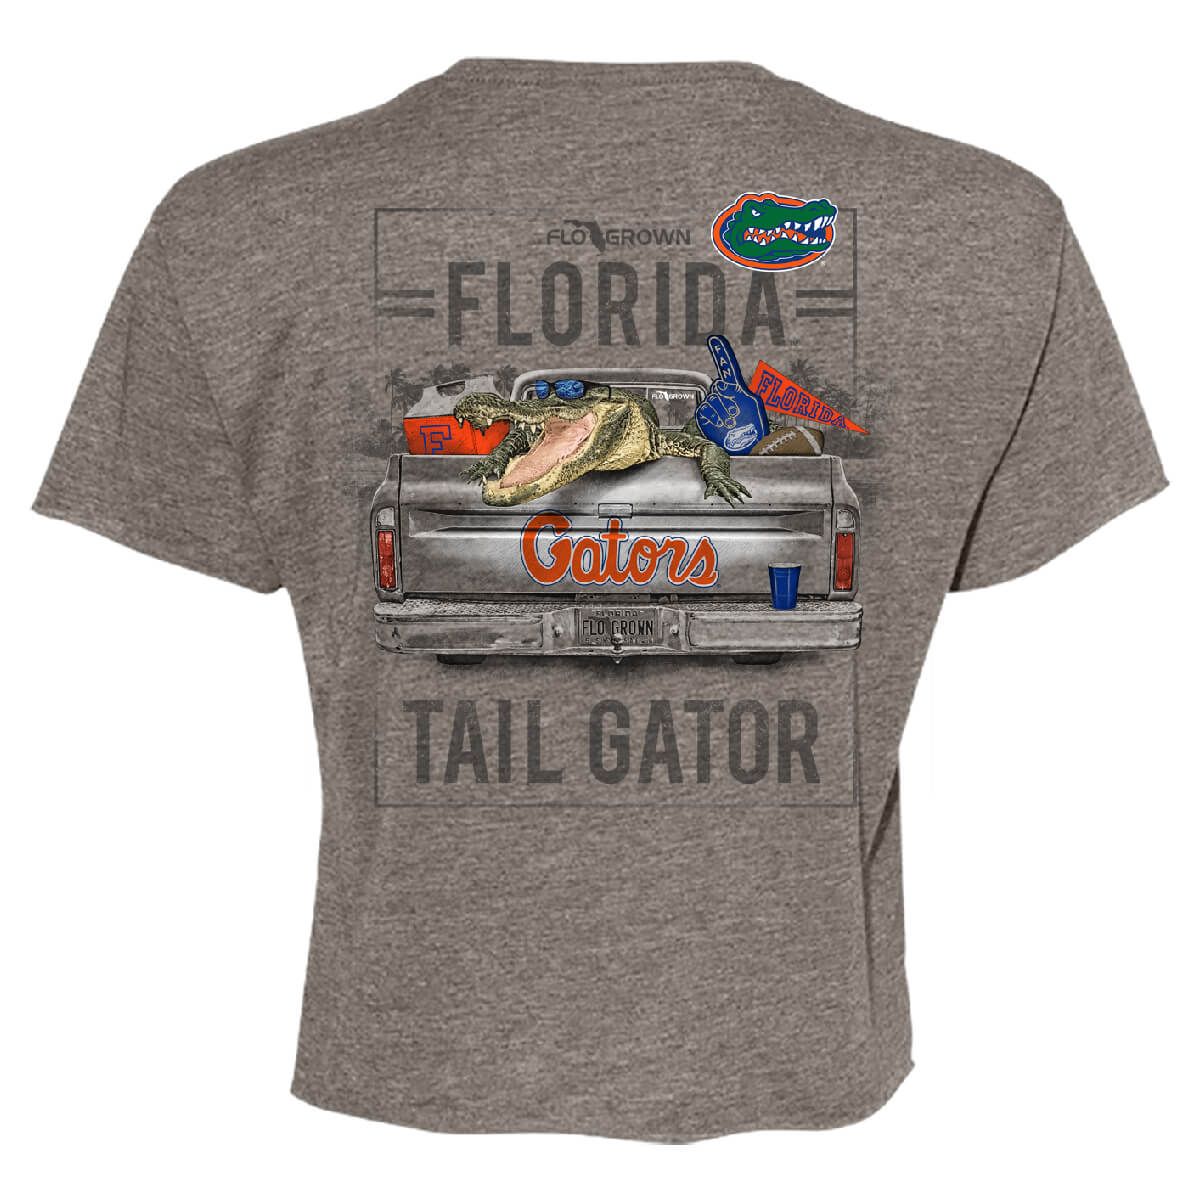 Florida Gators Tail Gator Crop Top - Back